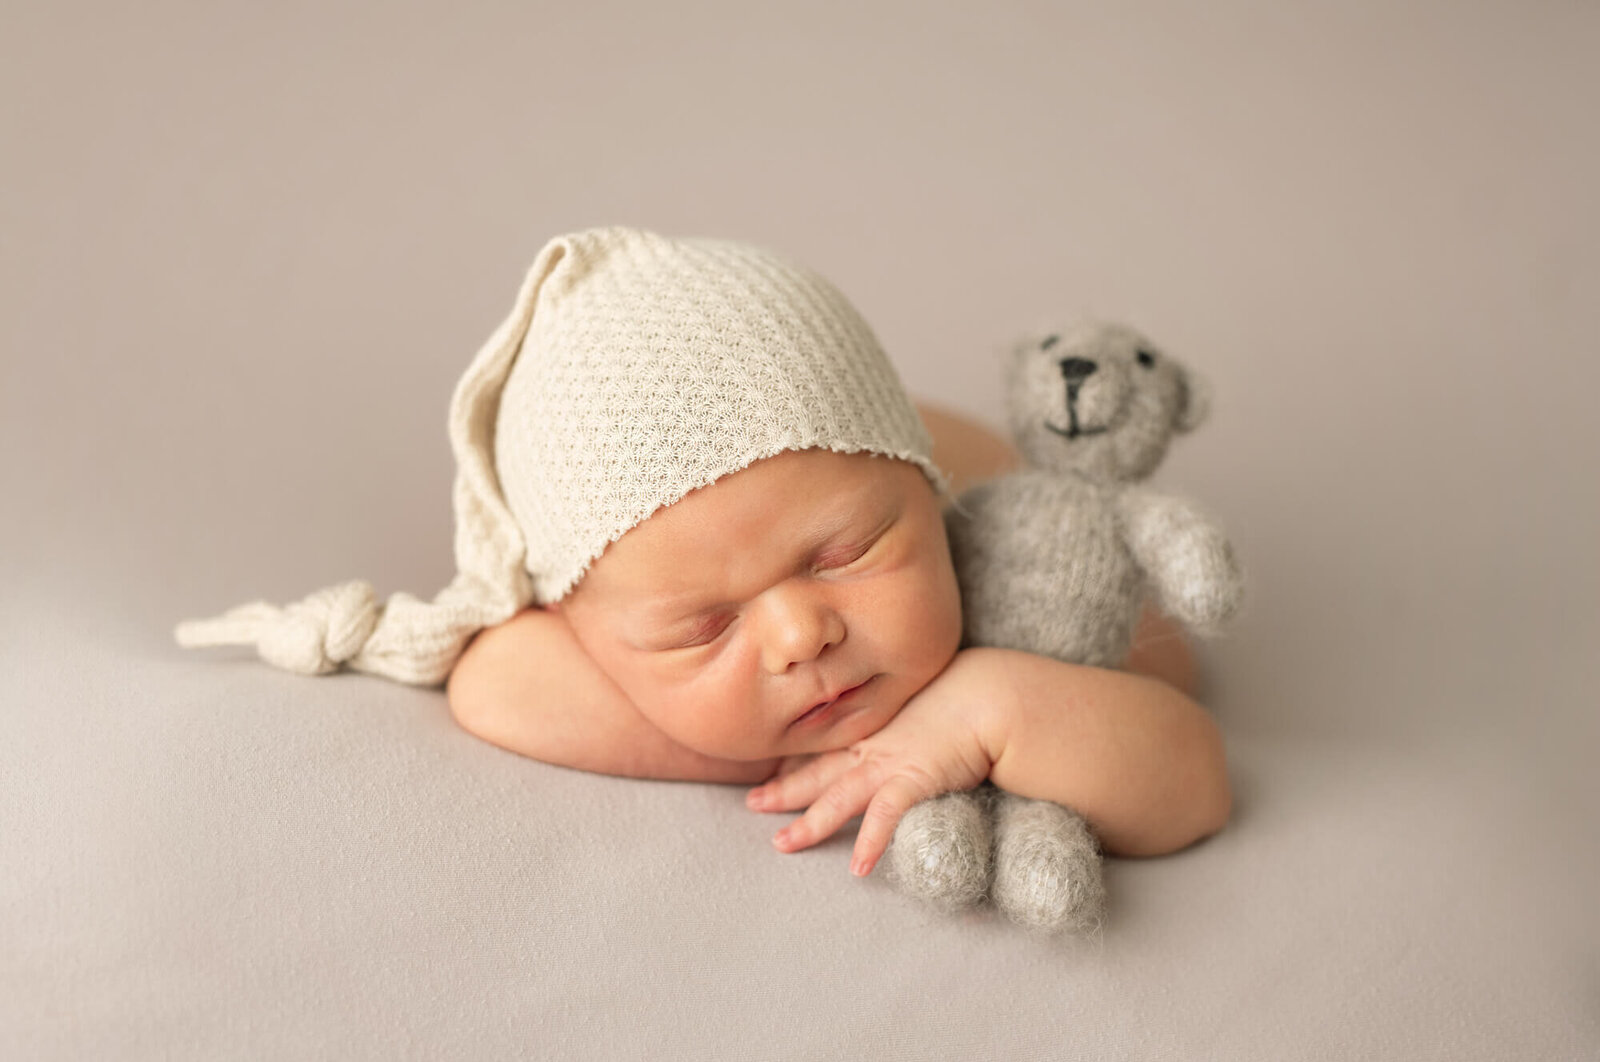 Sleeping baby boy with sleepy cap and teddy bear